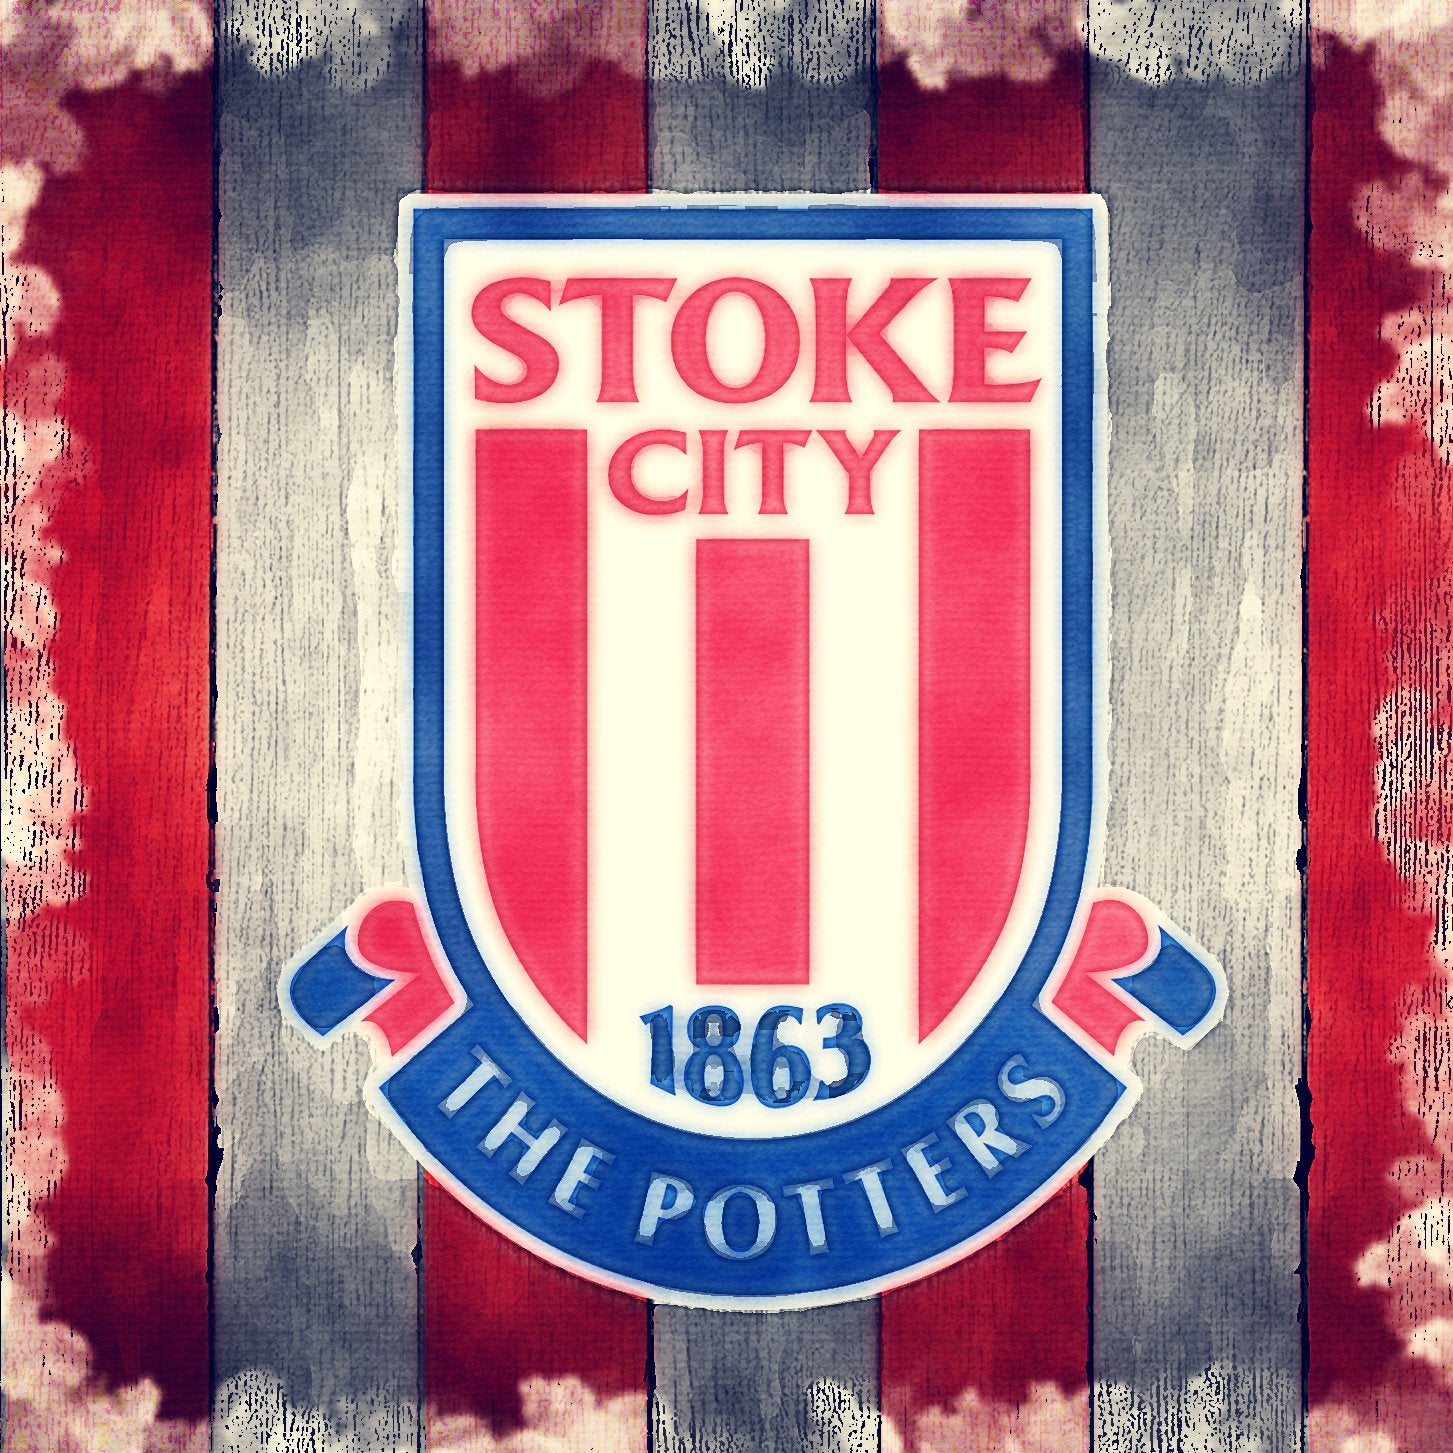 Lumartos Stoke City Football Club Crest Badge 186